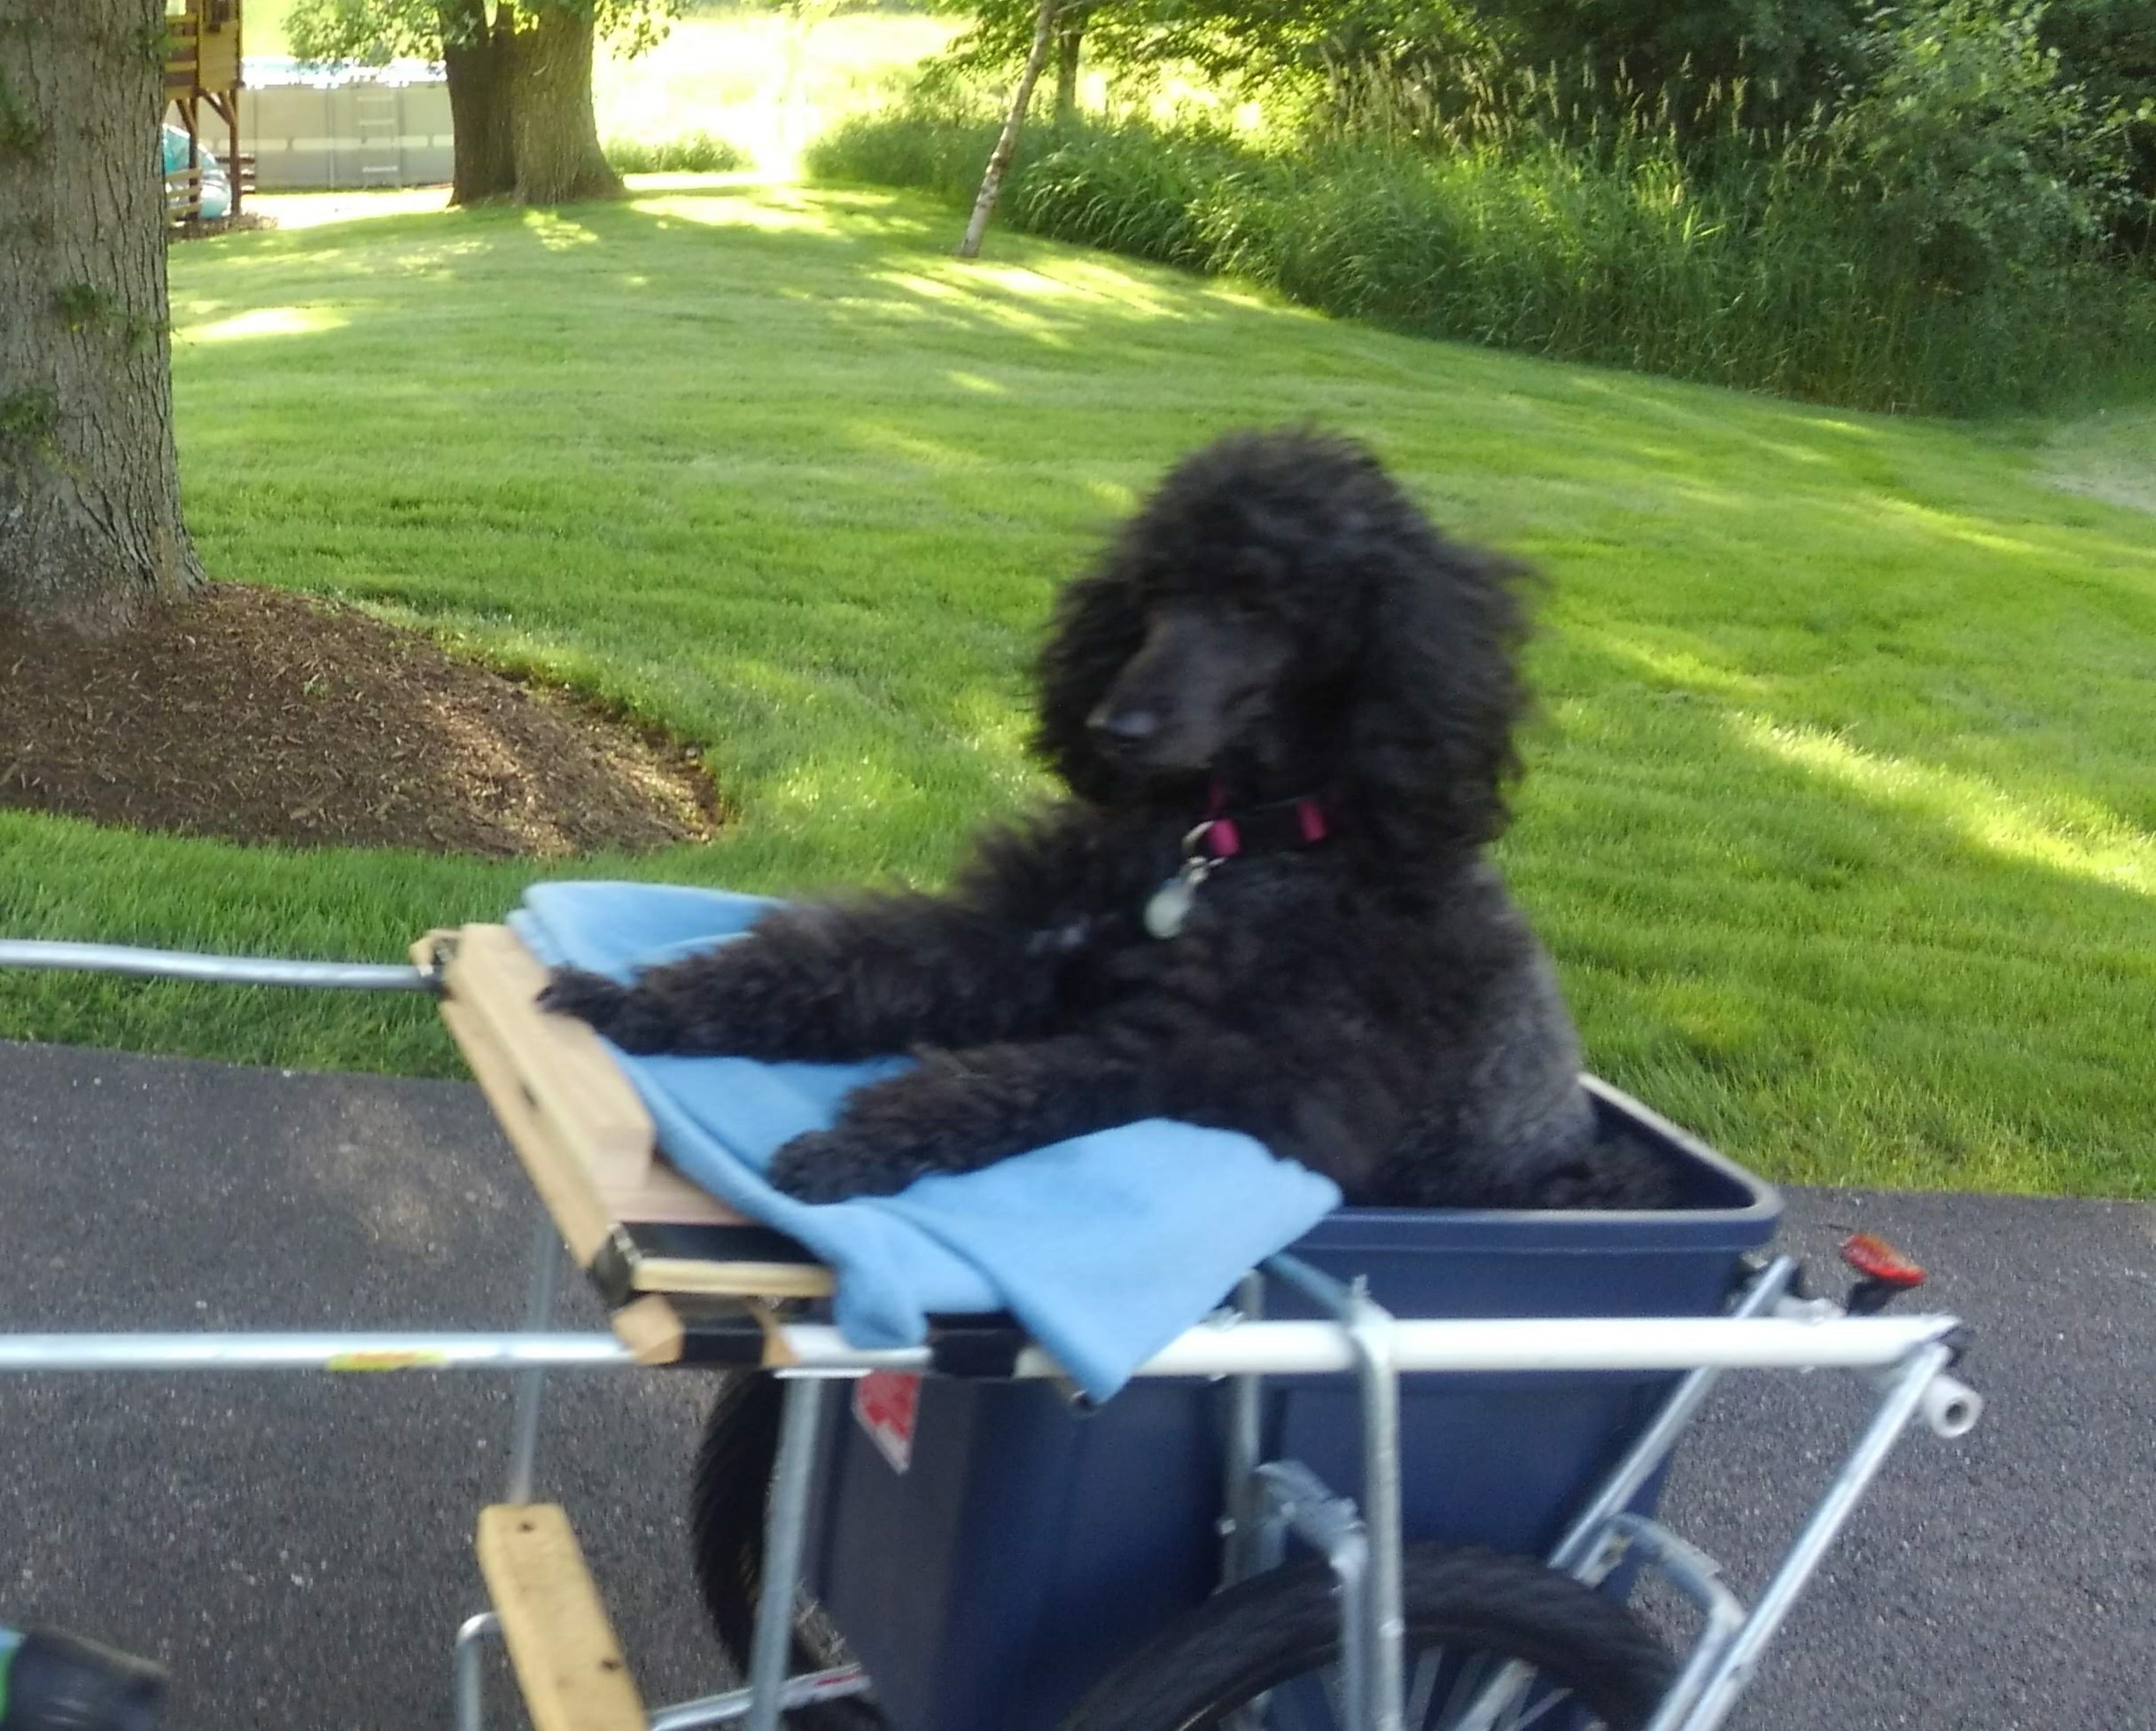 a black dog sitting inside a cart